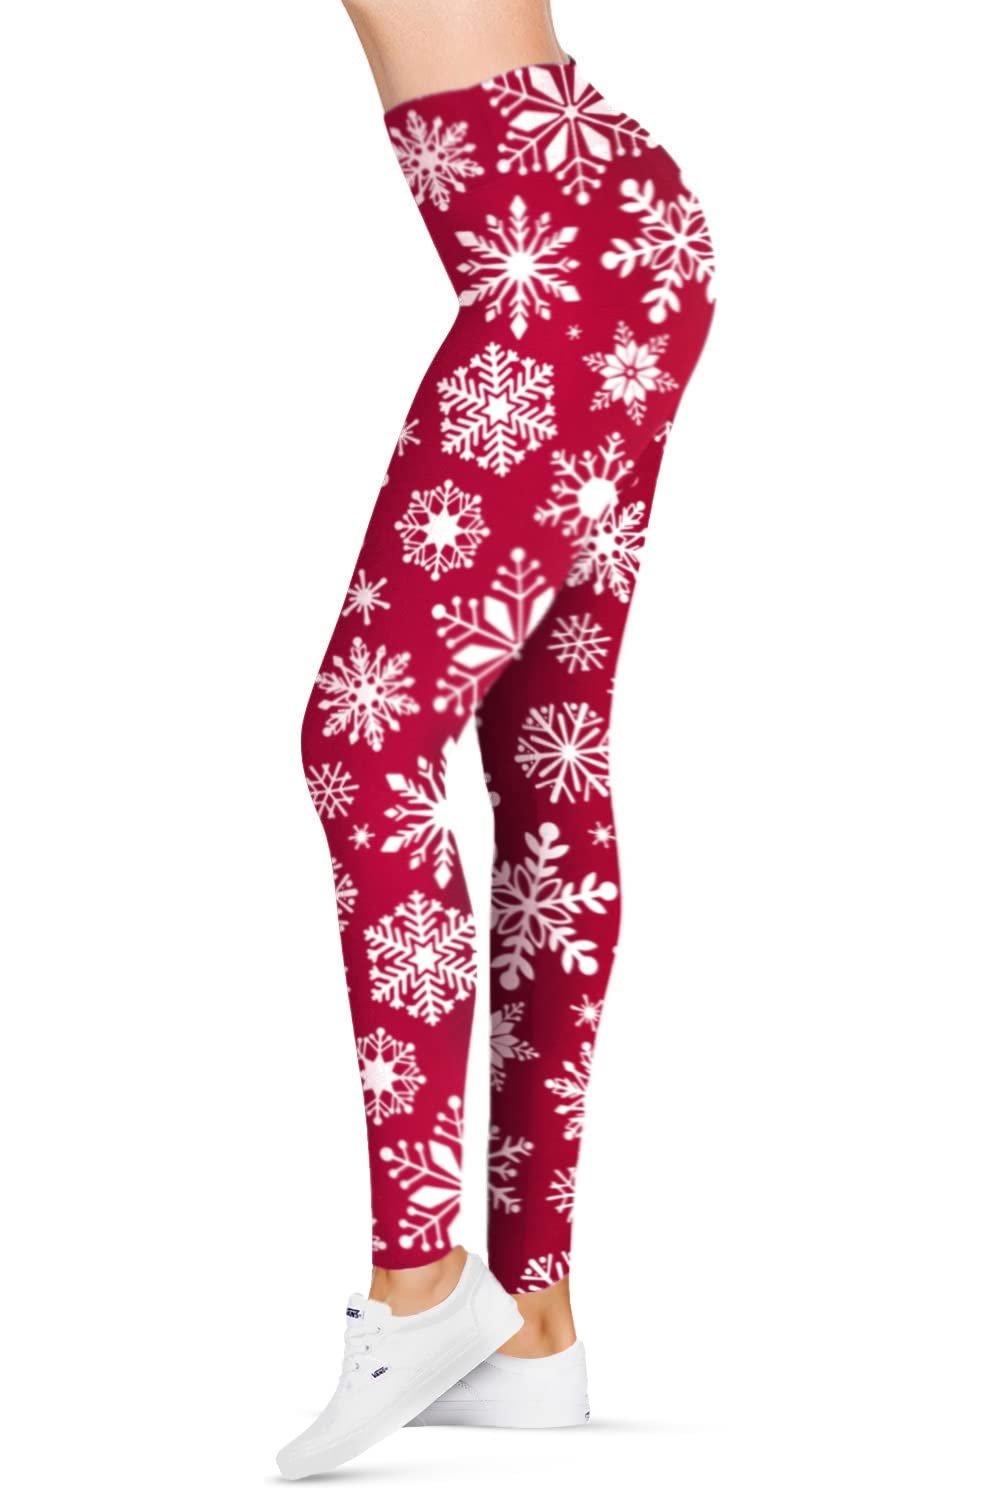 SATINA Christmas Leggings for Women - Buttery Soft Highwaisted Red Snowflake Holiday Leggings